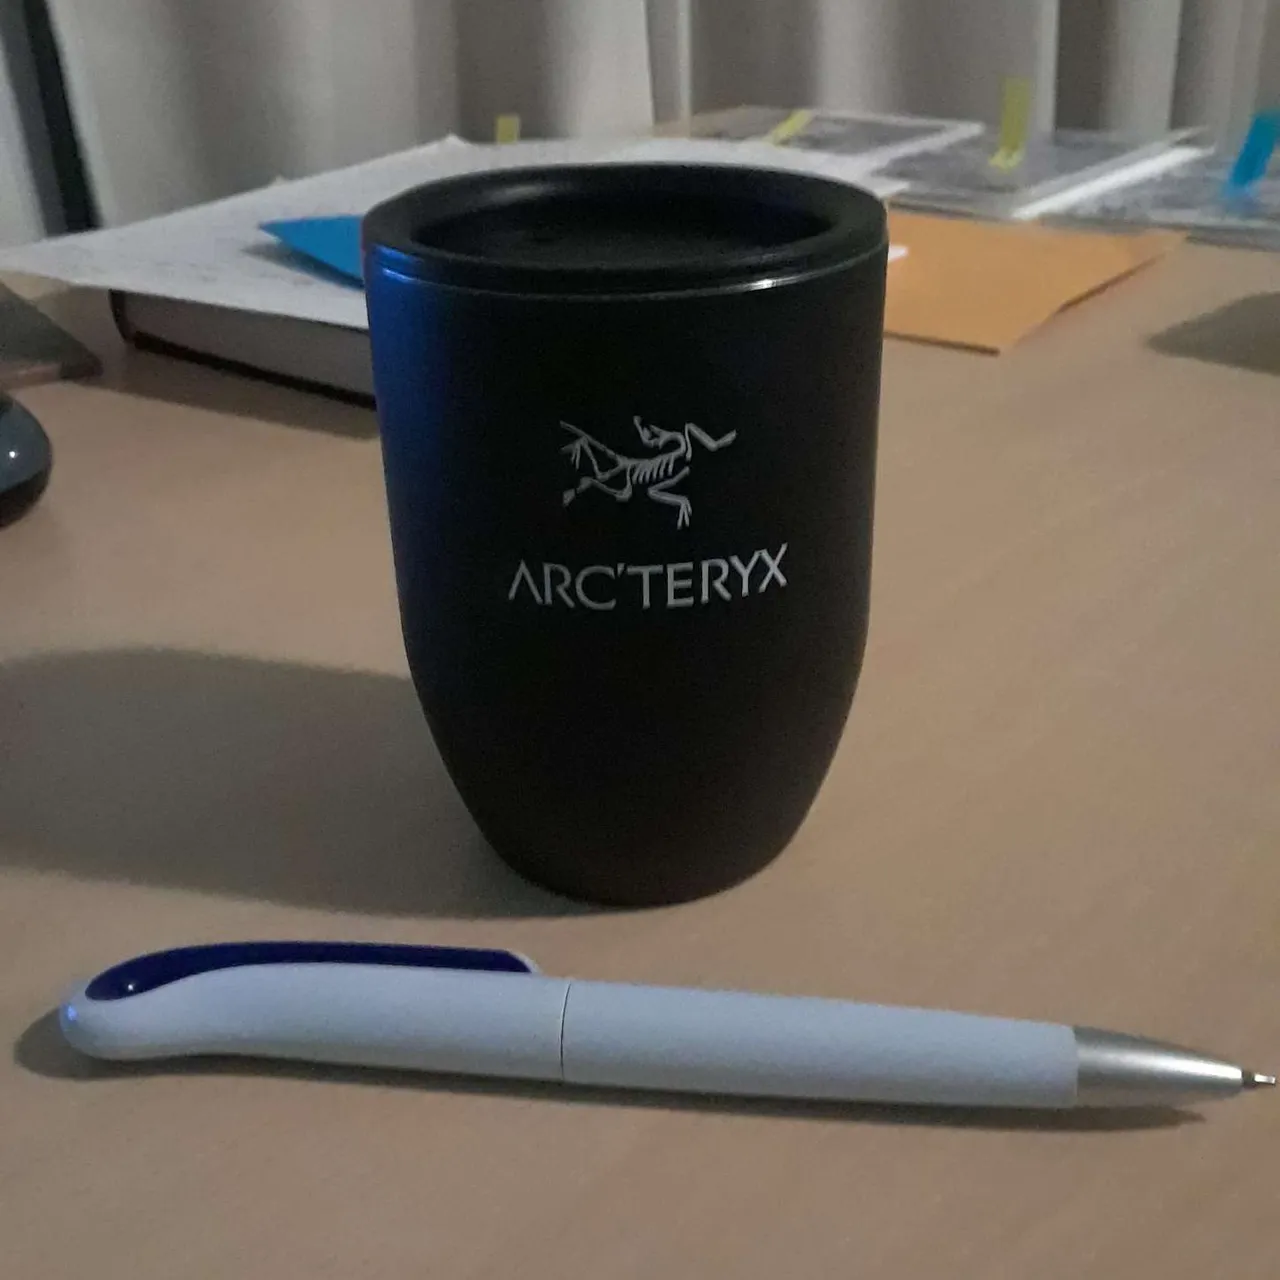 Arcteryx coffee cup photo 1